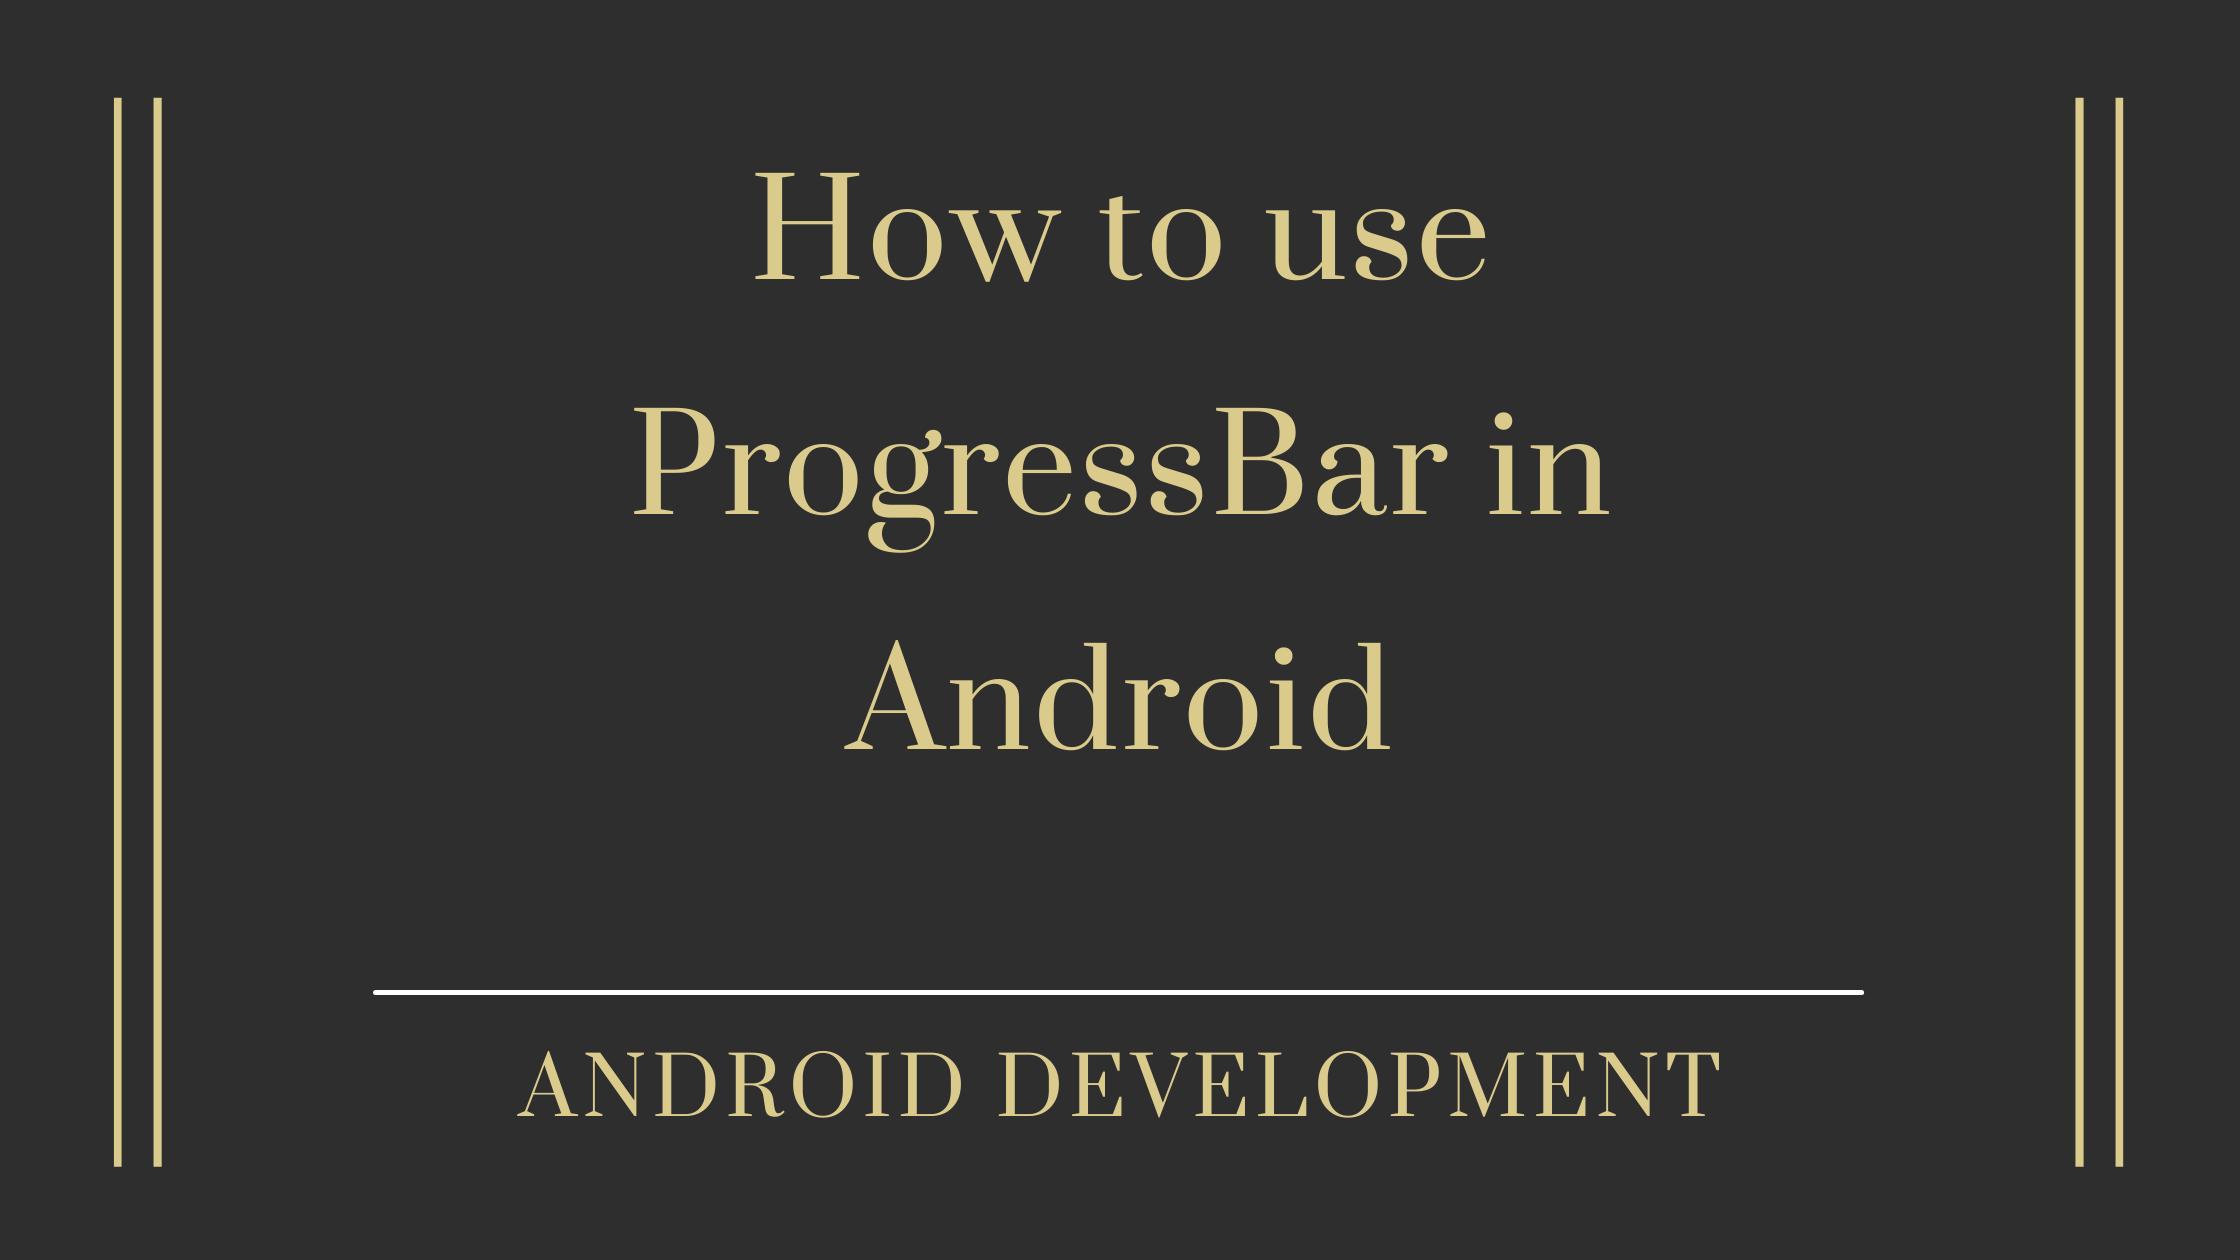 Progressbar in Android